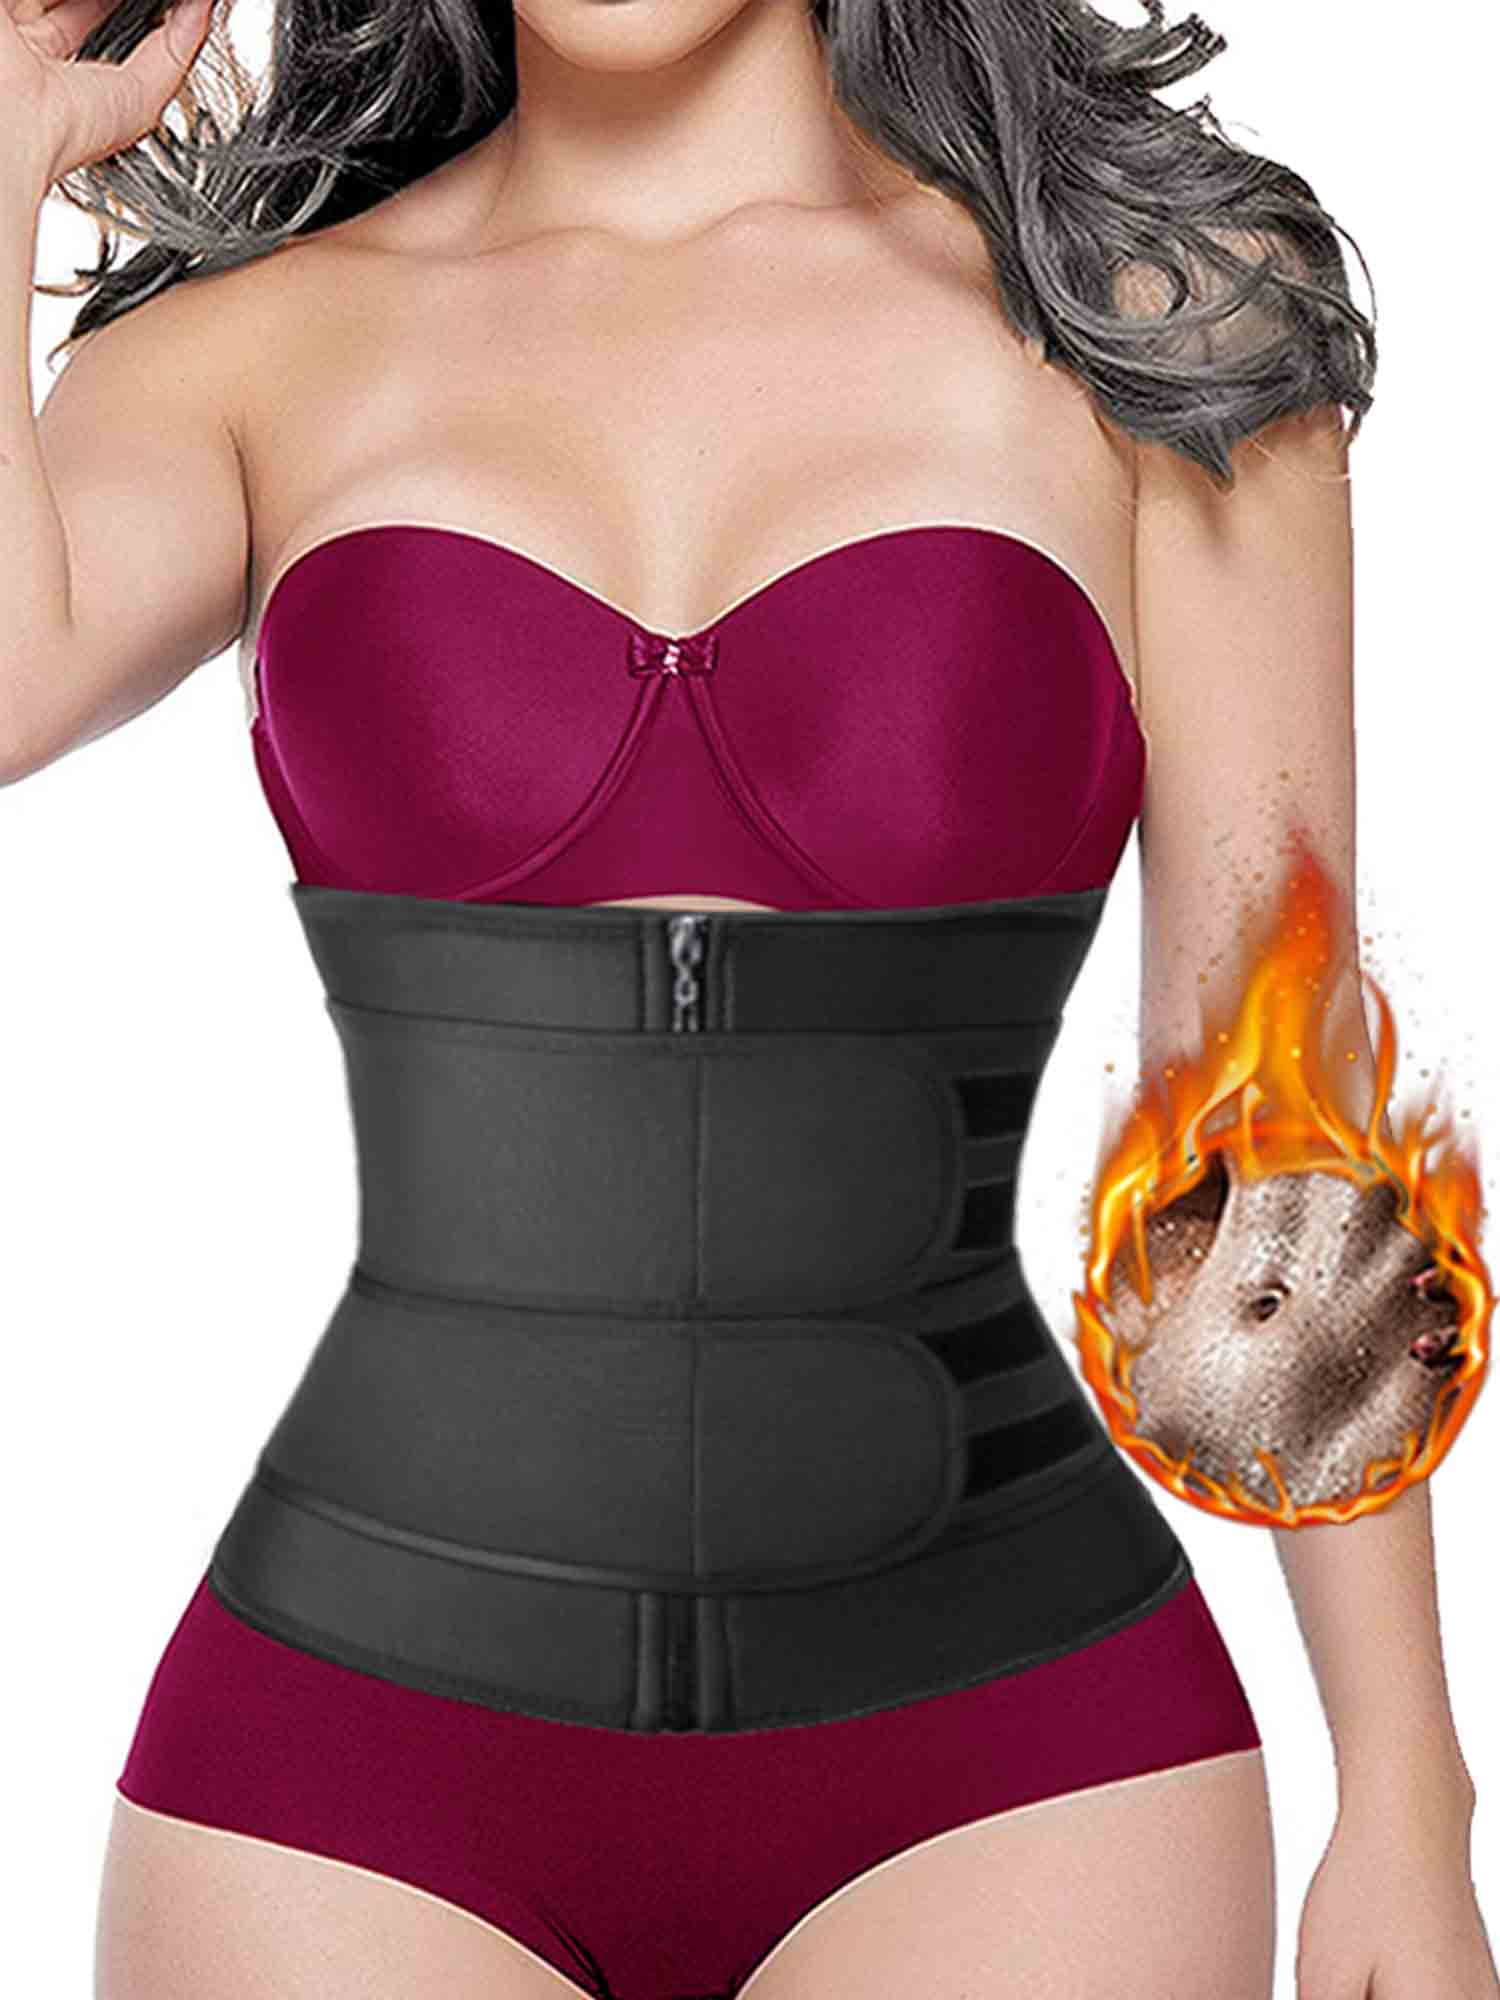 Details about   Women Body Shaper Hot Sauna Sweat Stomach Slimming Waist Pant Fat Burner Suit US 